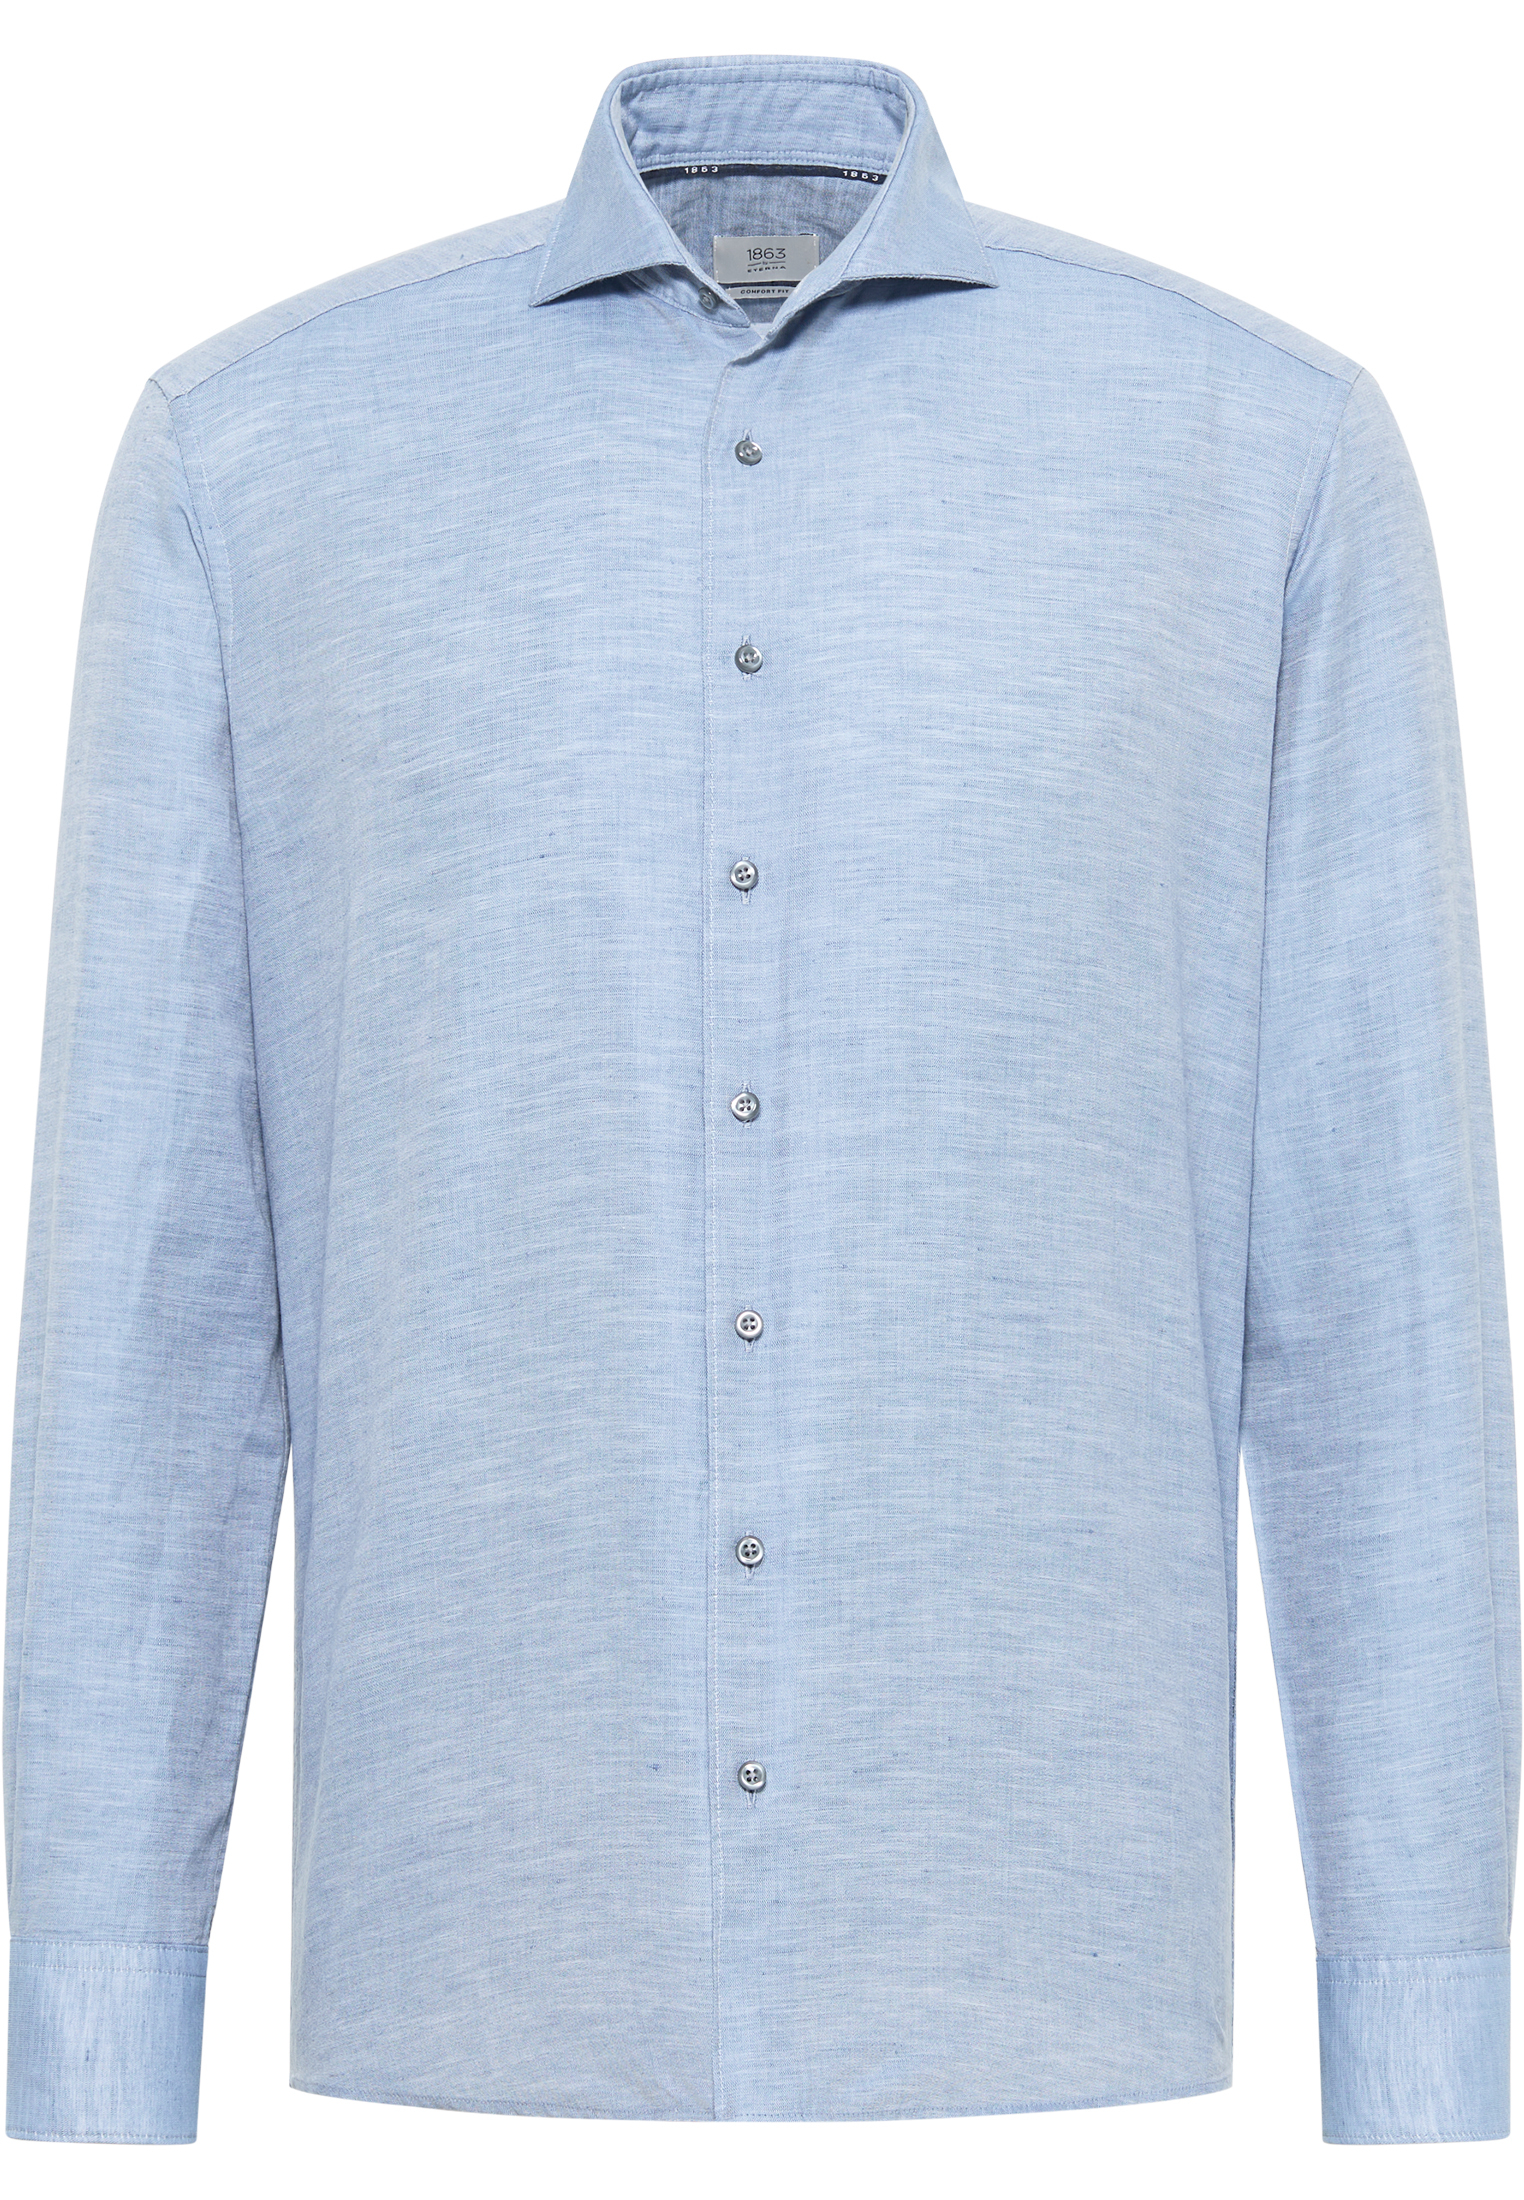 COMFORT FIT Linen Shirt in blau unifarben